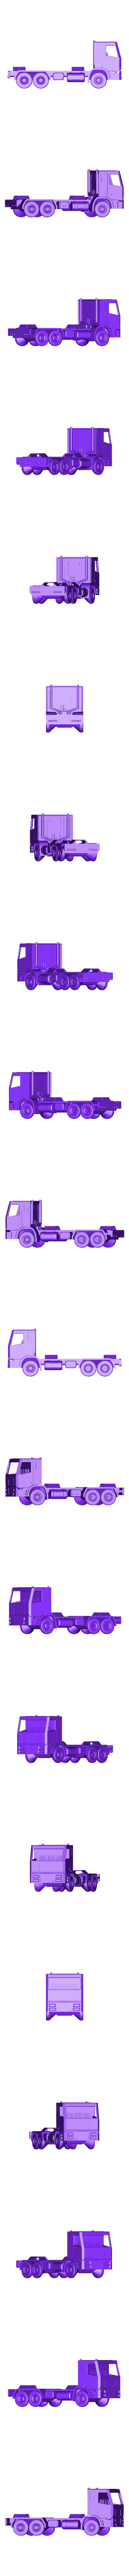 Truck_Base.stl Download STL file Print-in-Place Crane Module • 3D print template, budinavit